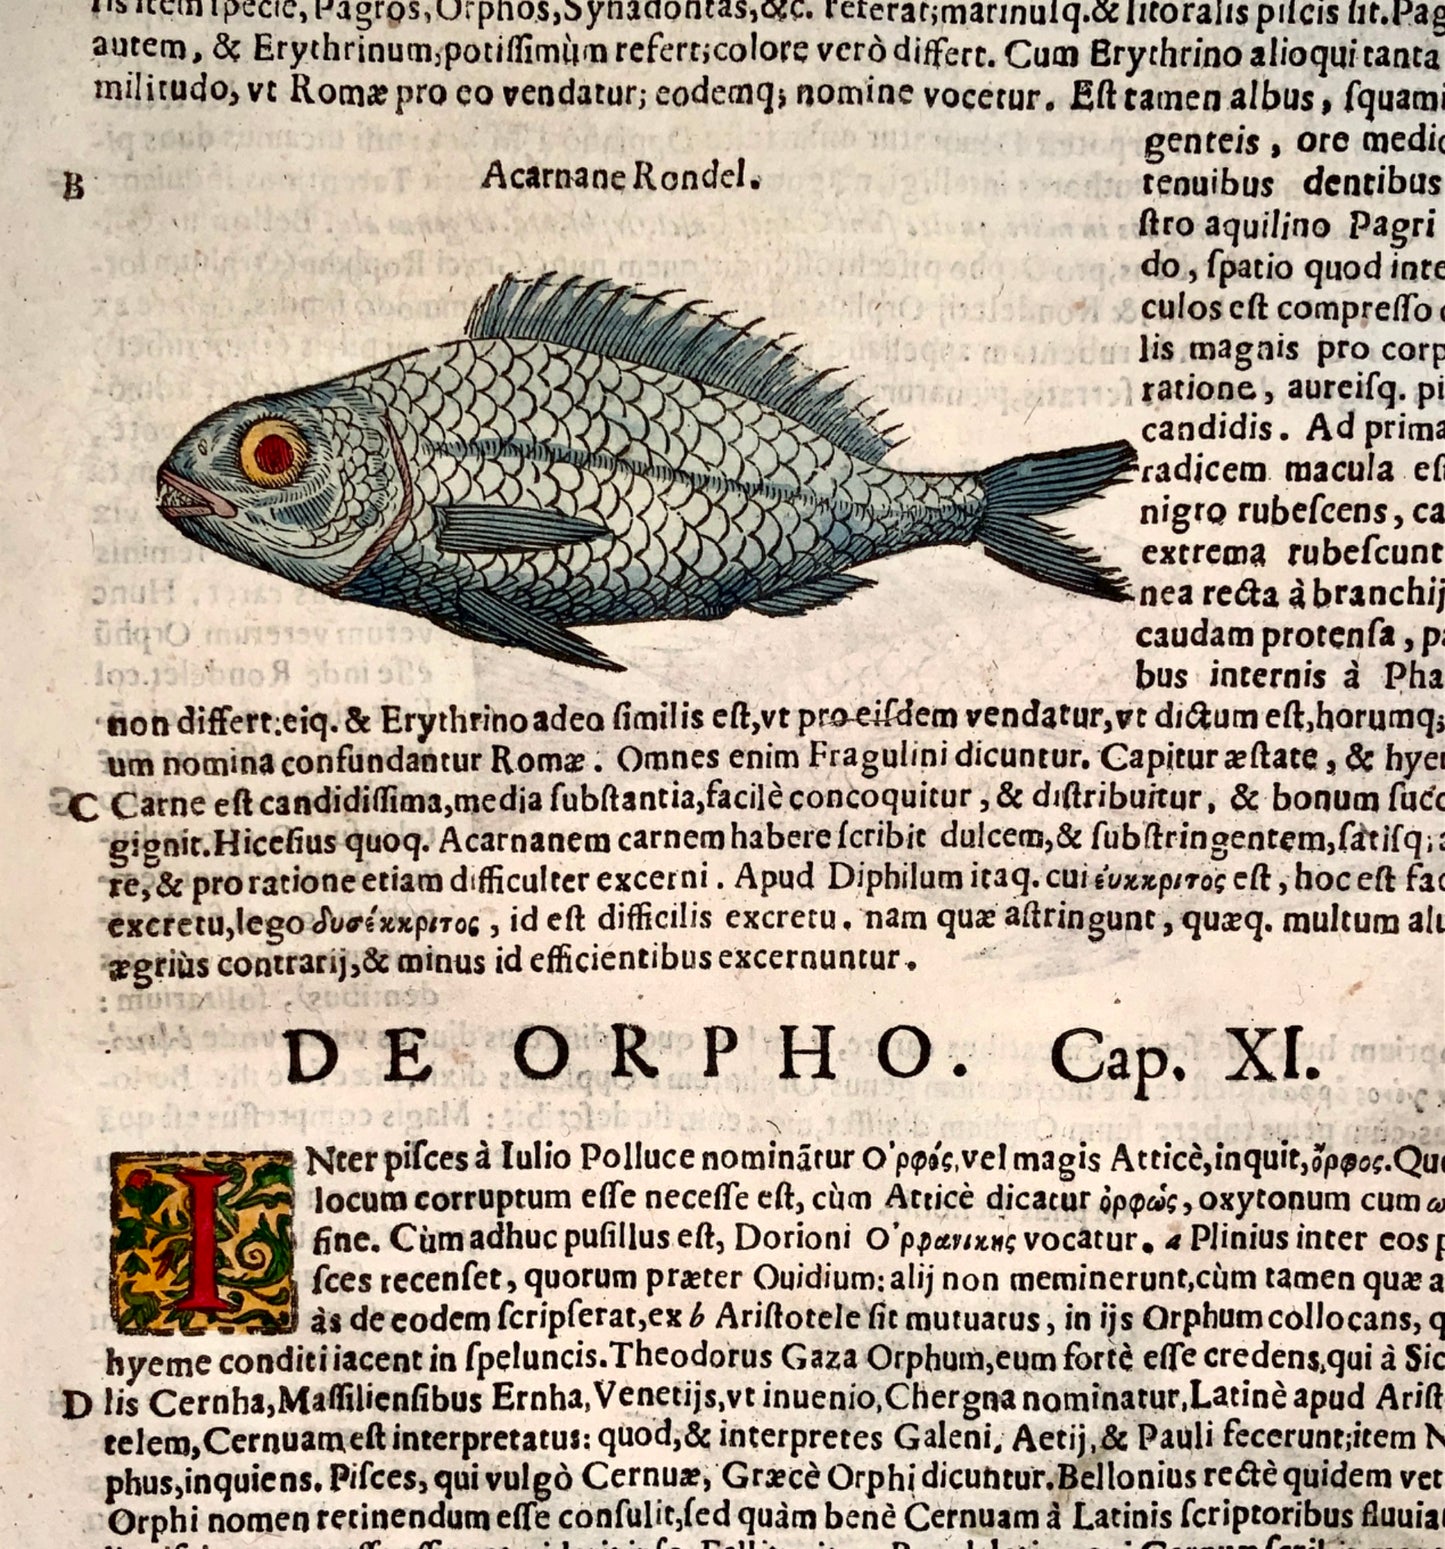 1638 ORFE Seabream Fish - Coriolano; Aldrovandi Large folio woodcut leaf